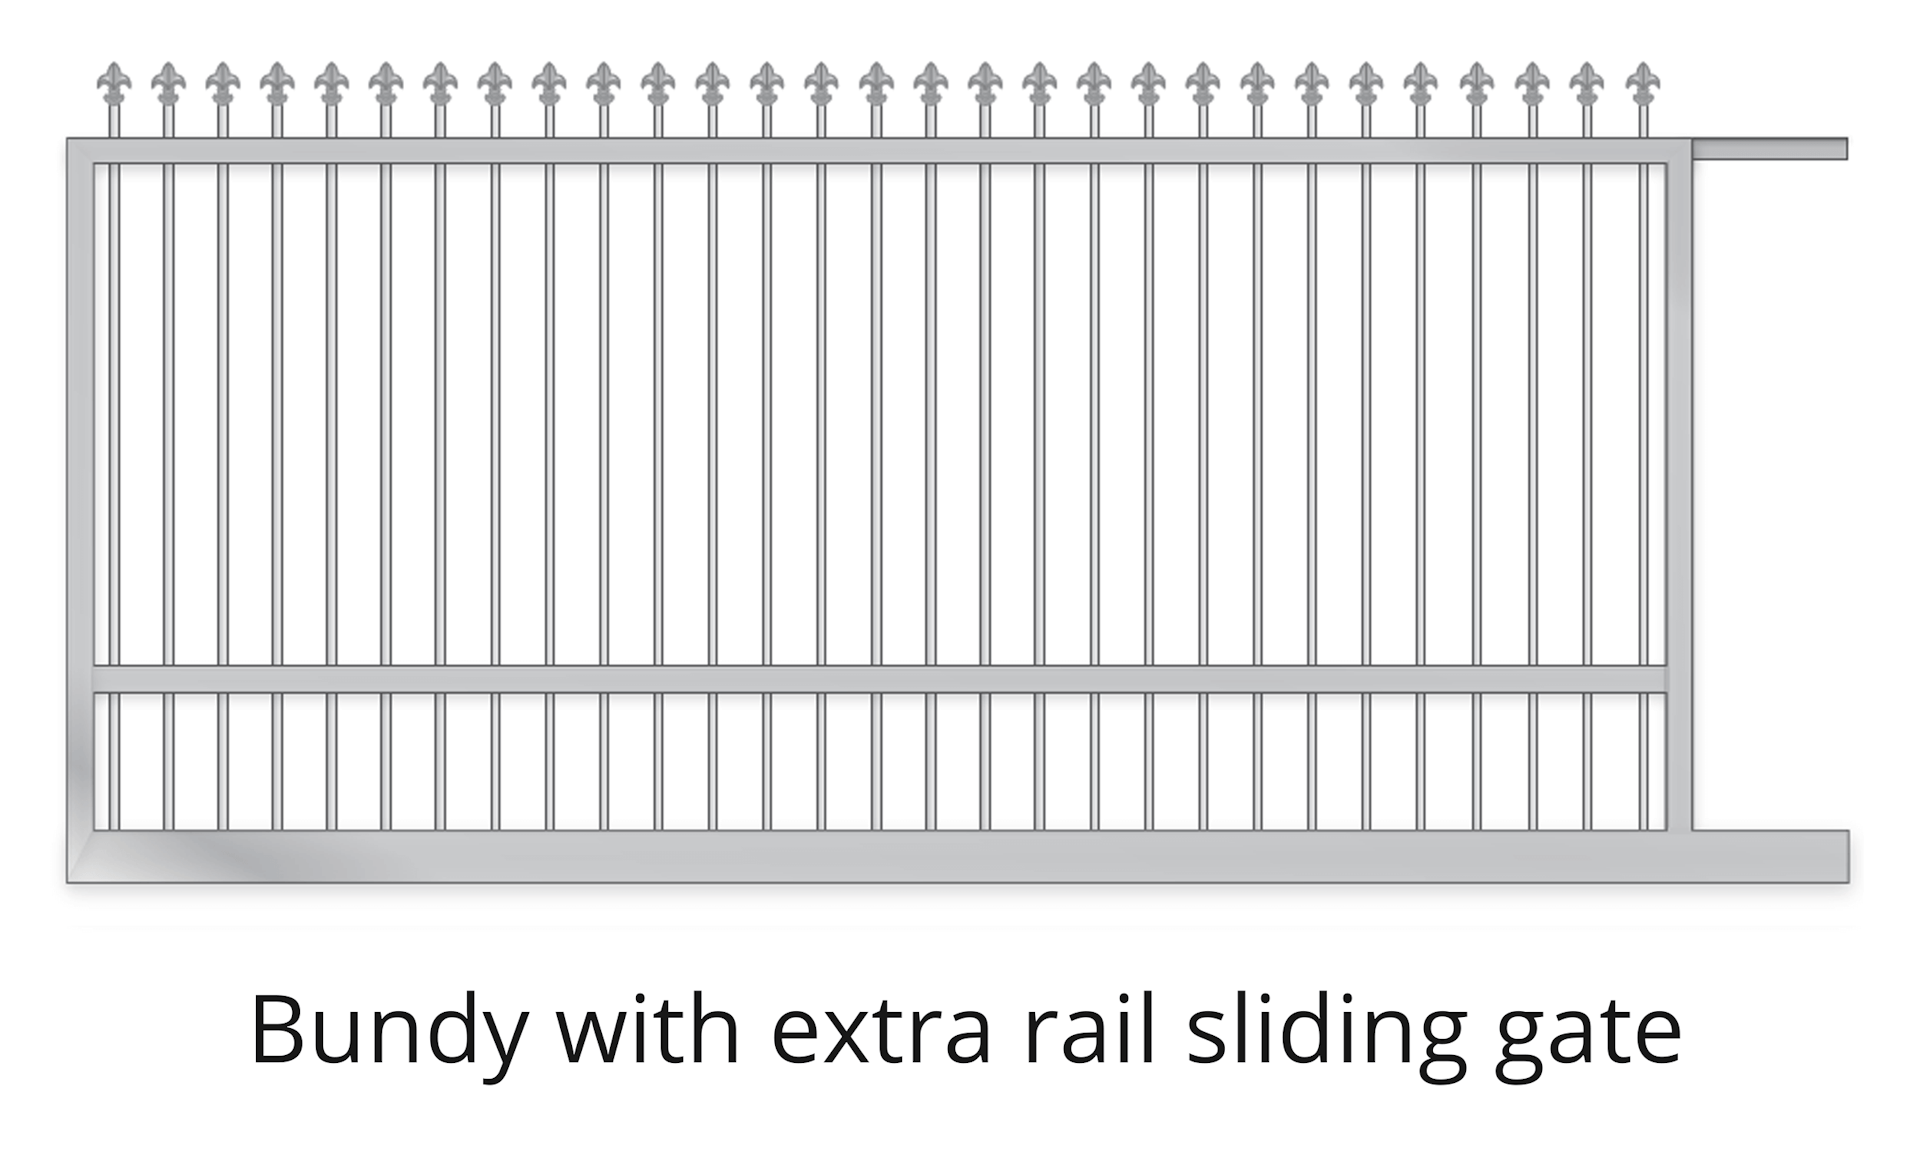 Bundy with extra rail sliding gate